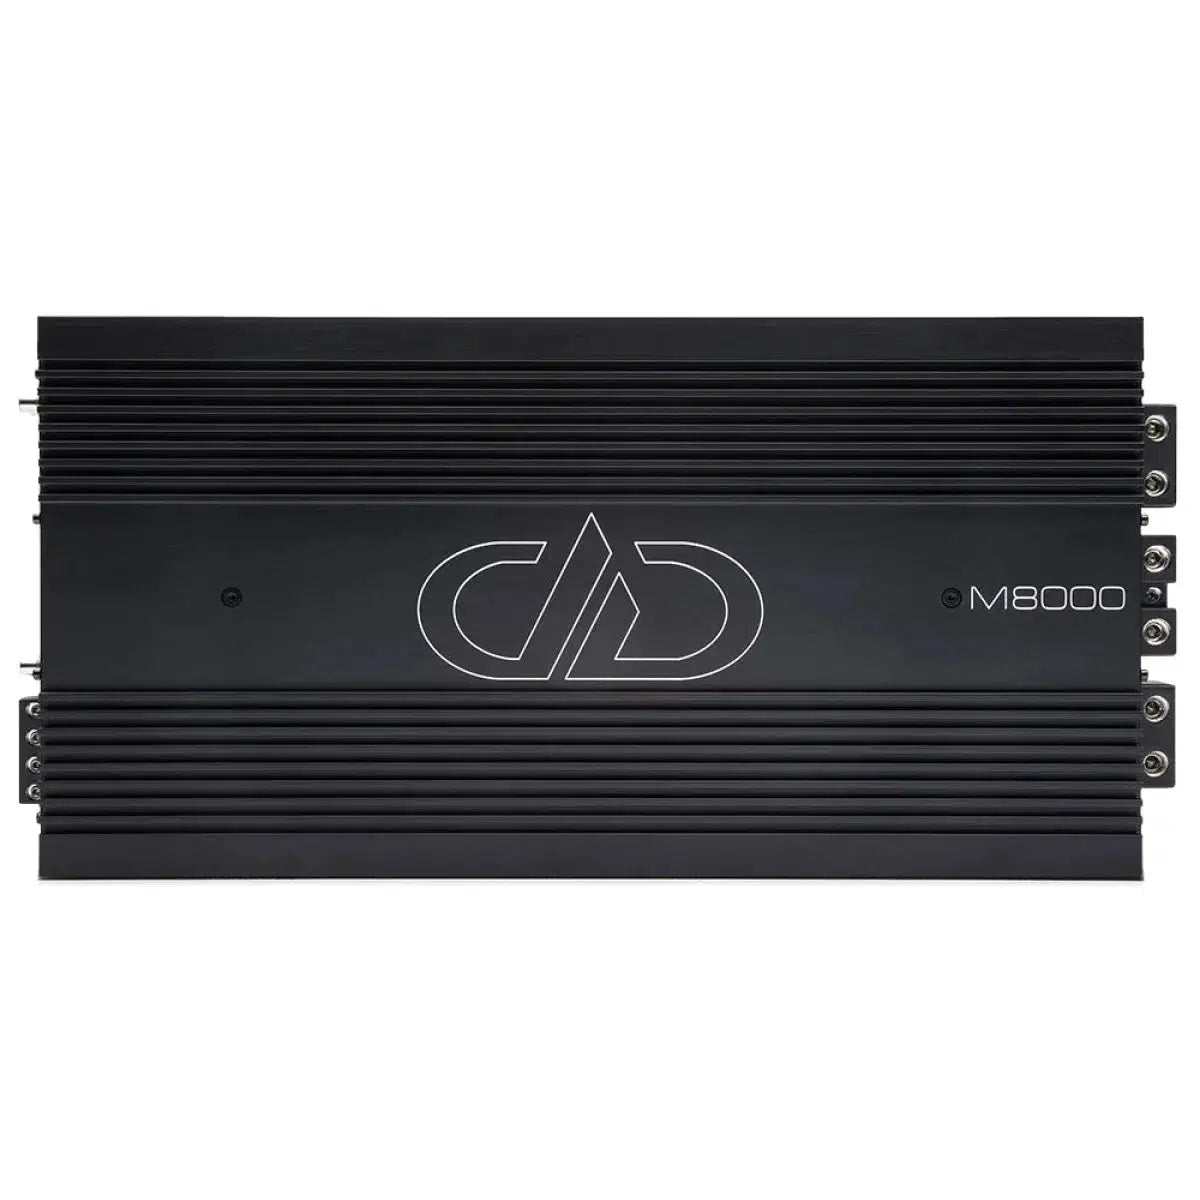 DD Audio-M8000-1-Channel Amplifier-Masori.de